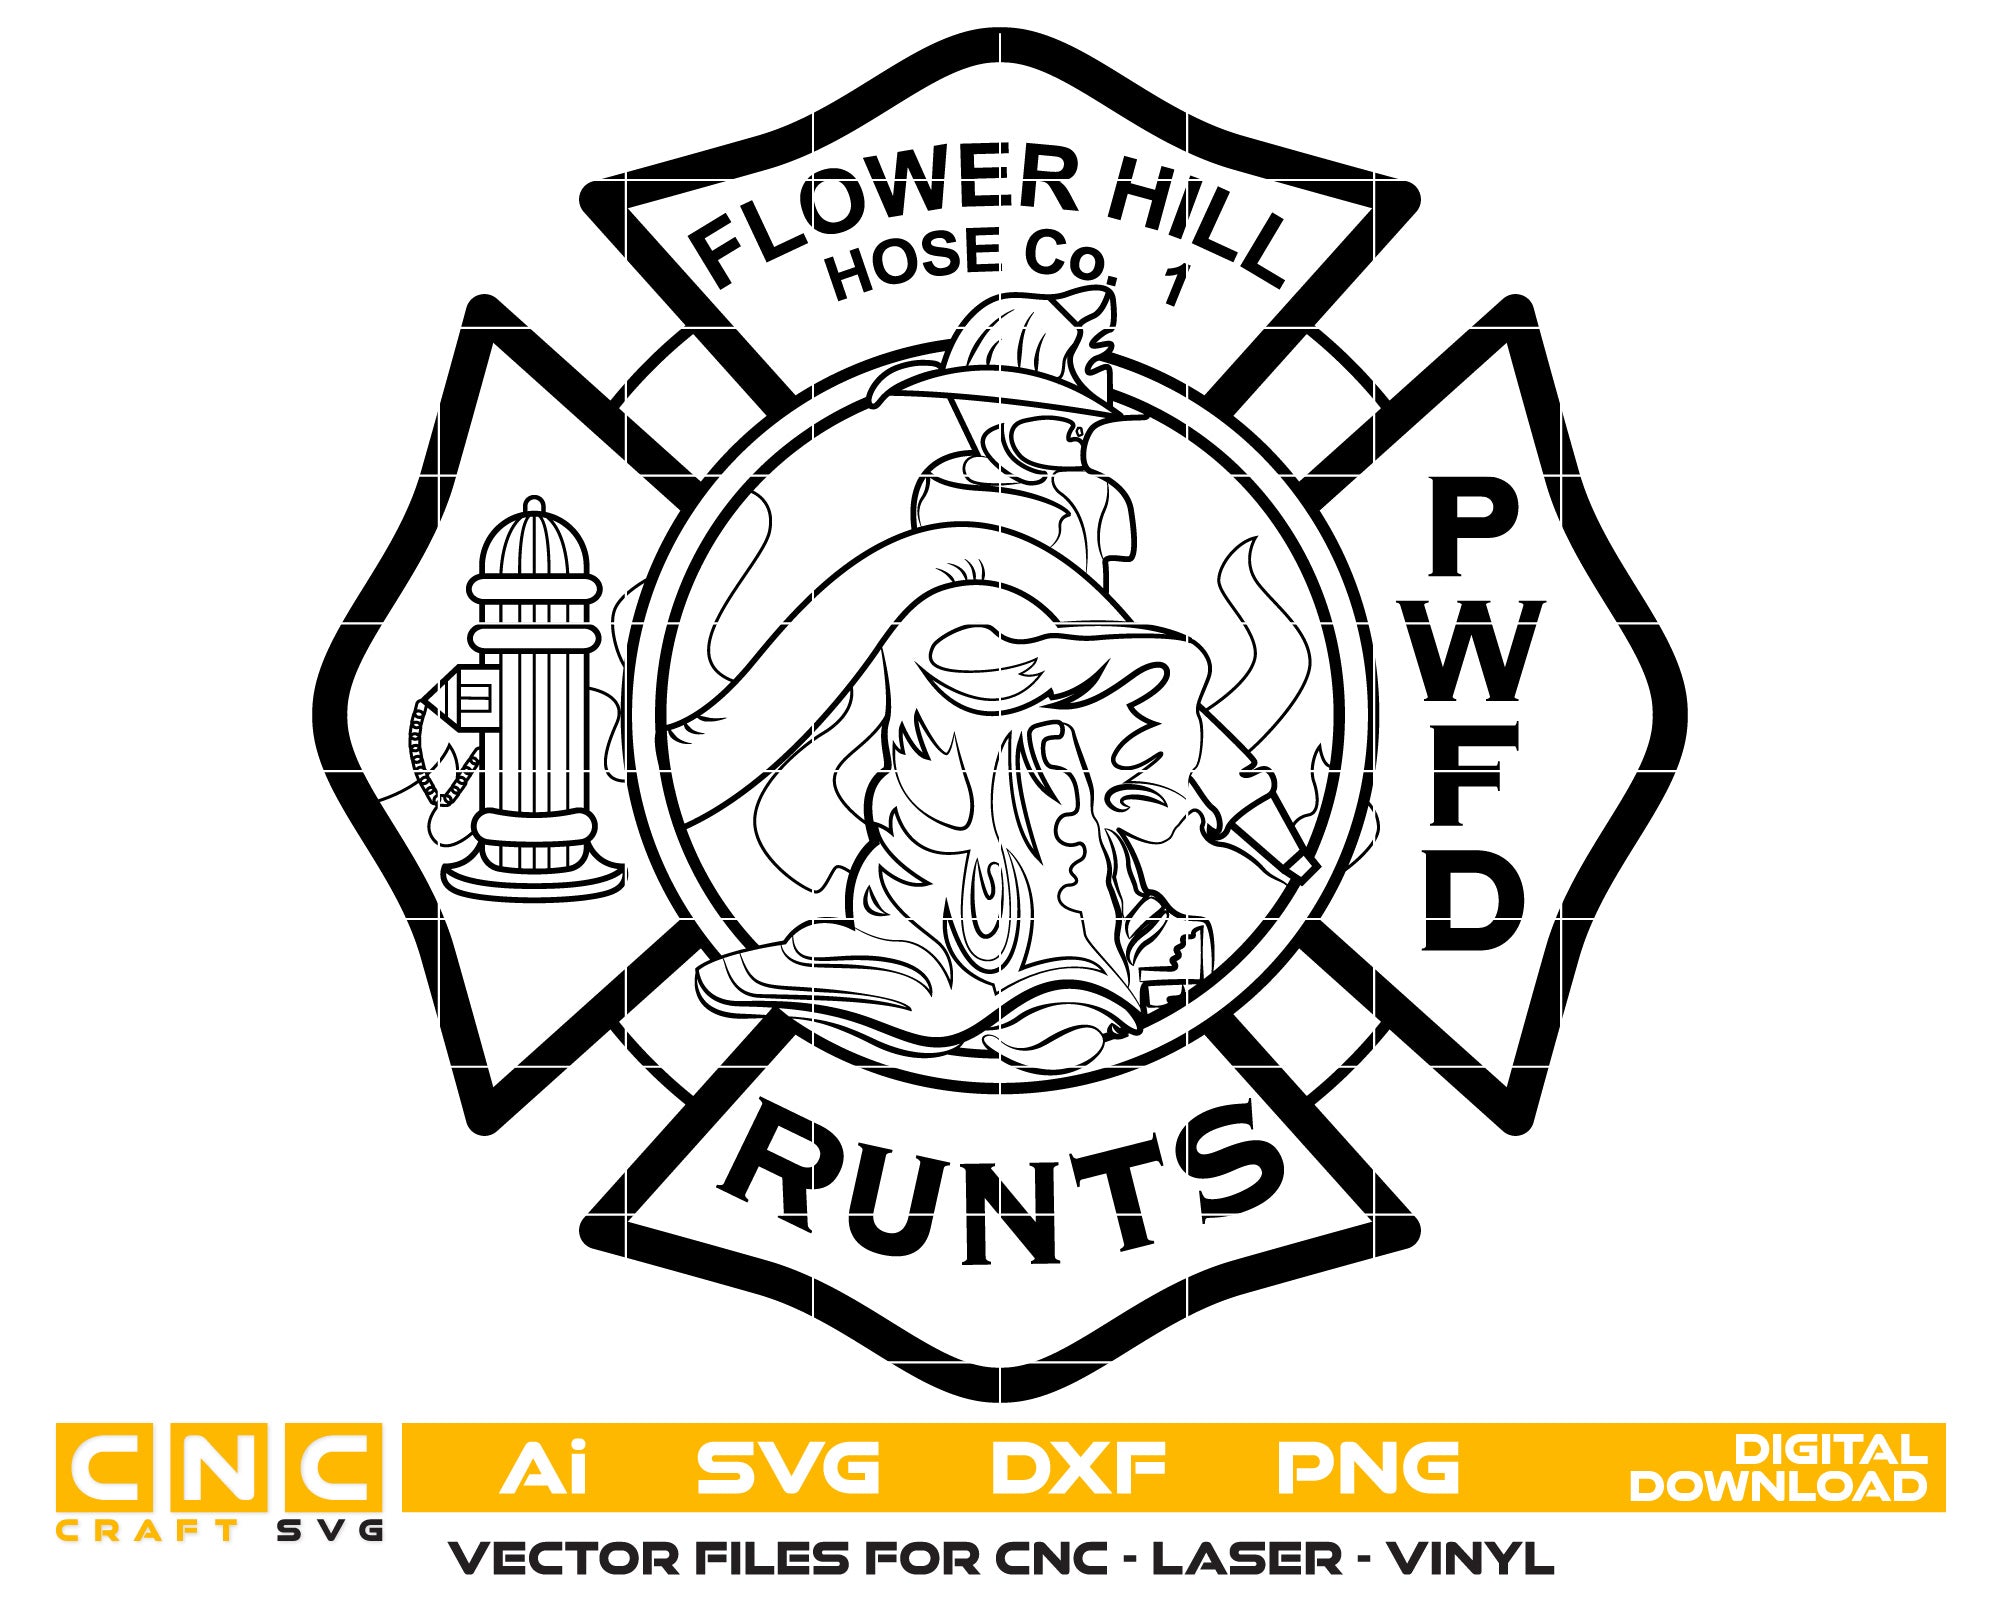 Flower Hill Hose Co 1 Badge Vector Art, Ai,SVG, DXF, PNG, Digital Files